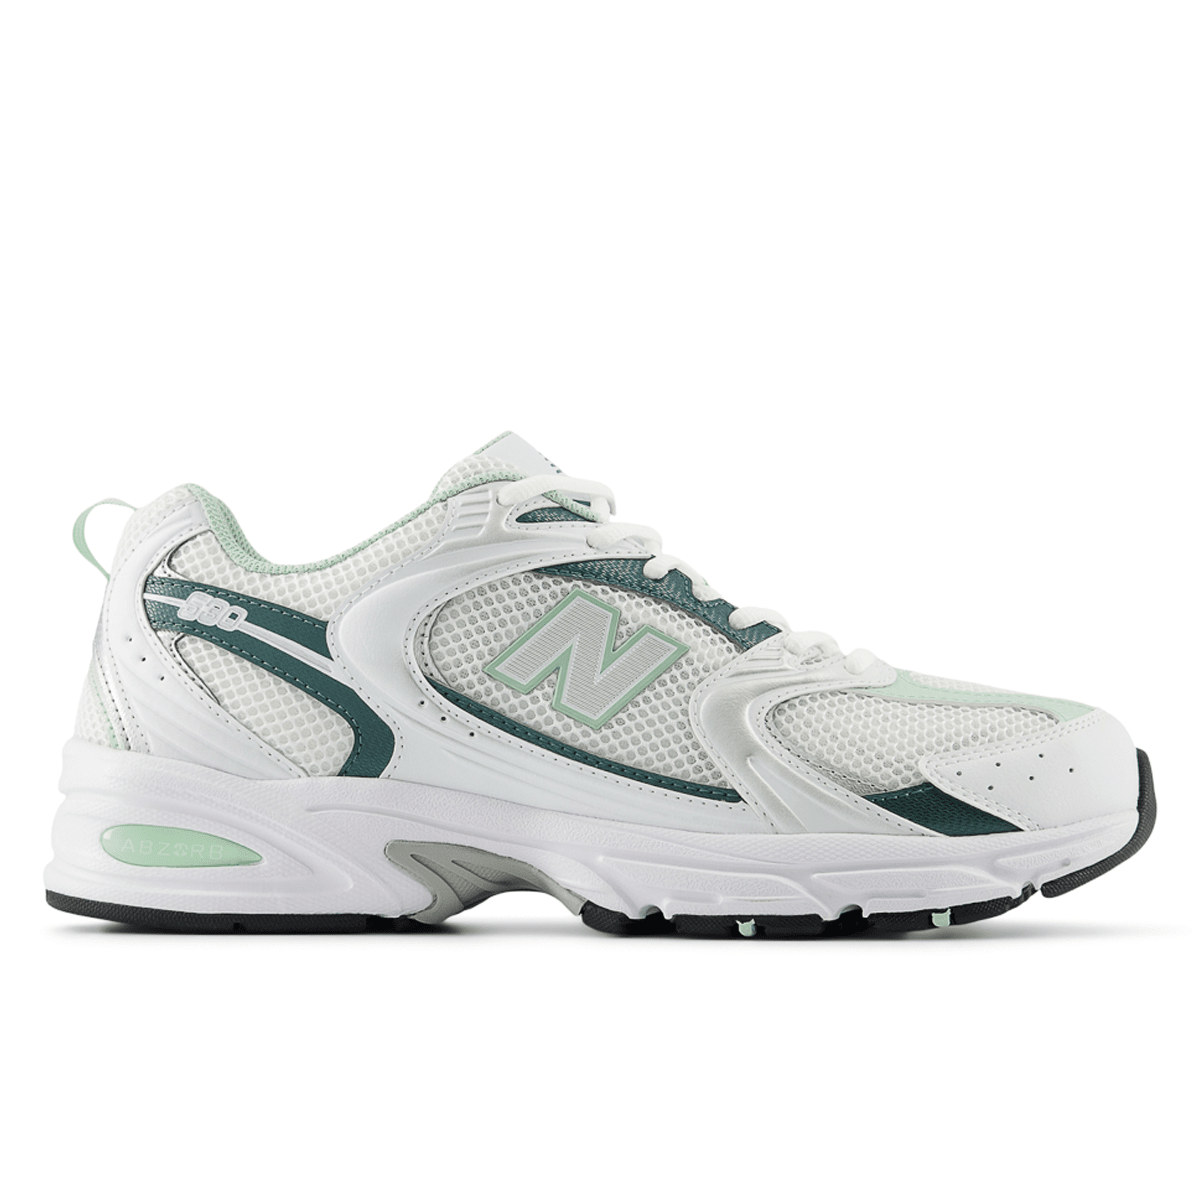 New Balance 530 Verde "White Mint" Blizz Sneakers 